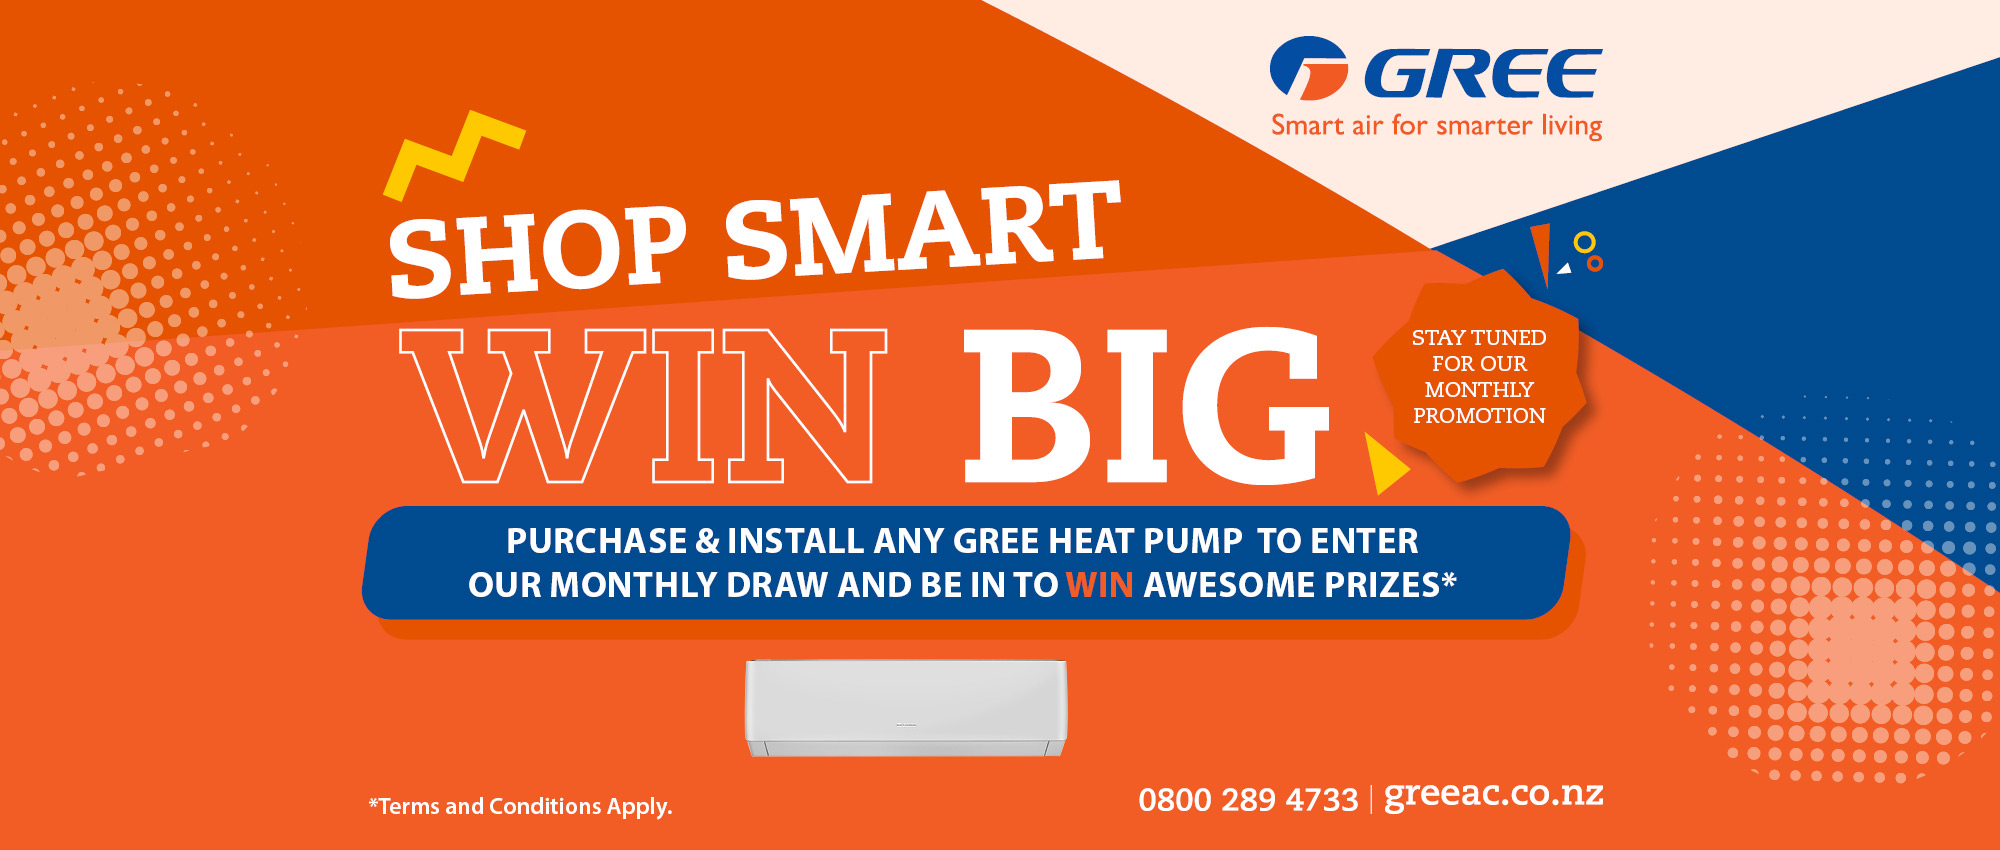 Shop Smart Win Big with Gree Heat Pumps